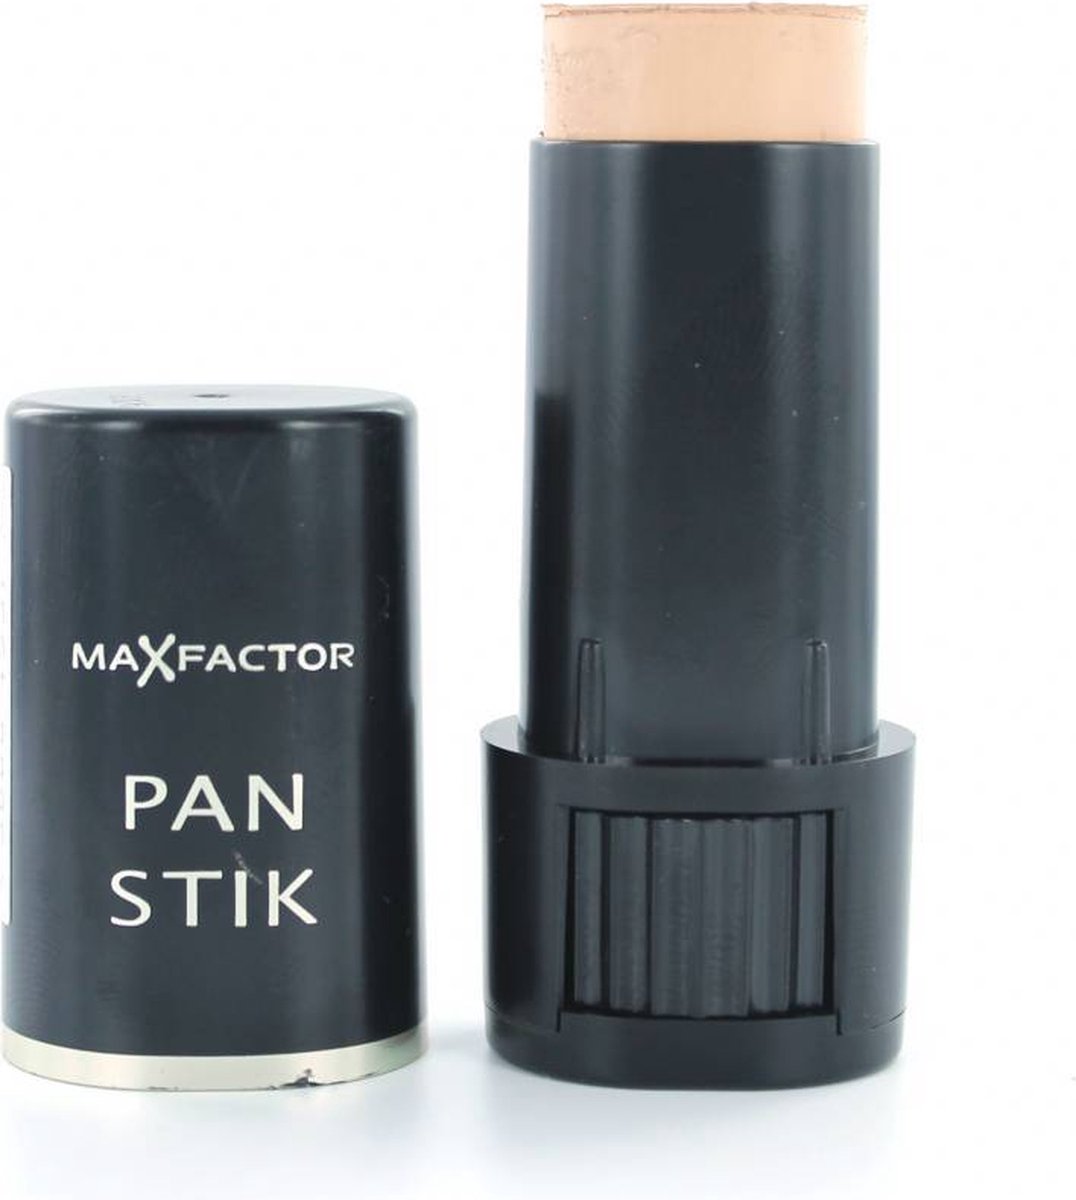 Max Factor Pan Stik Foundation Stick - 12 True Beige